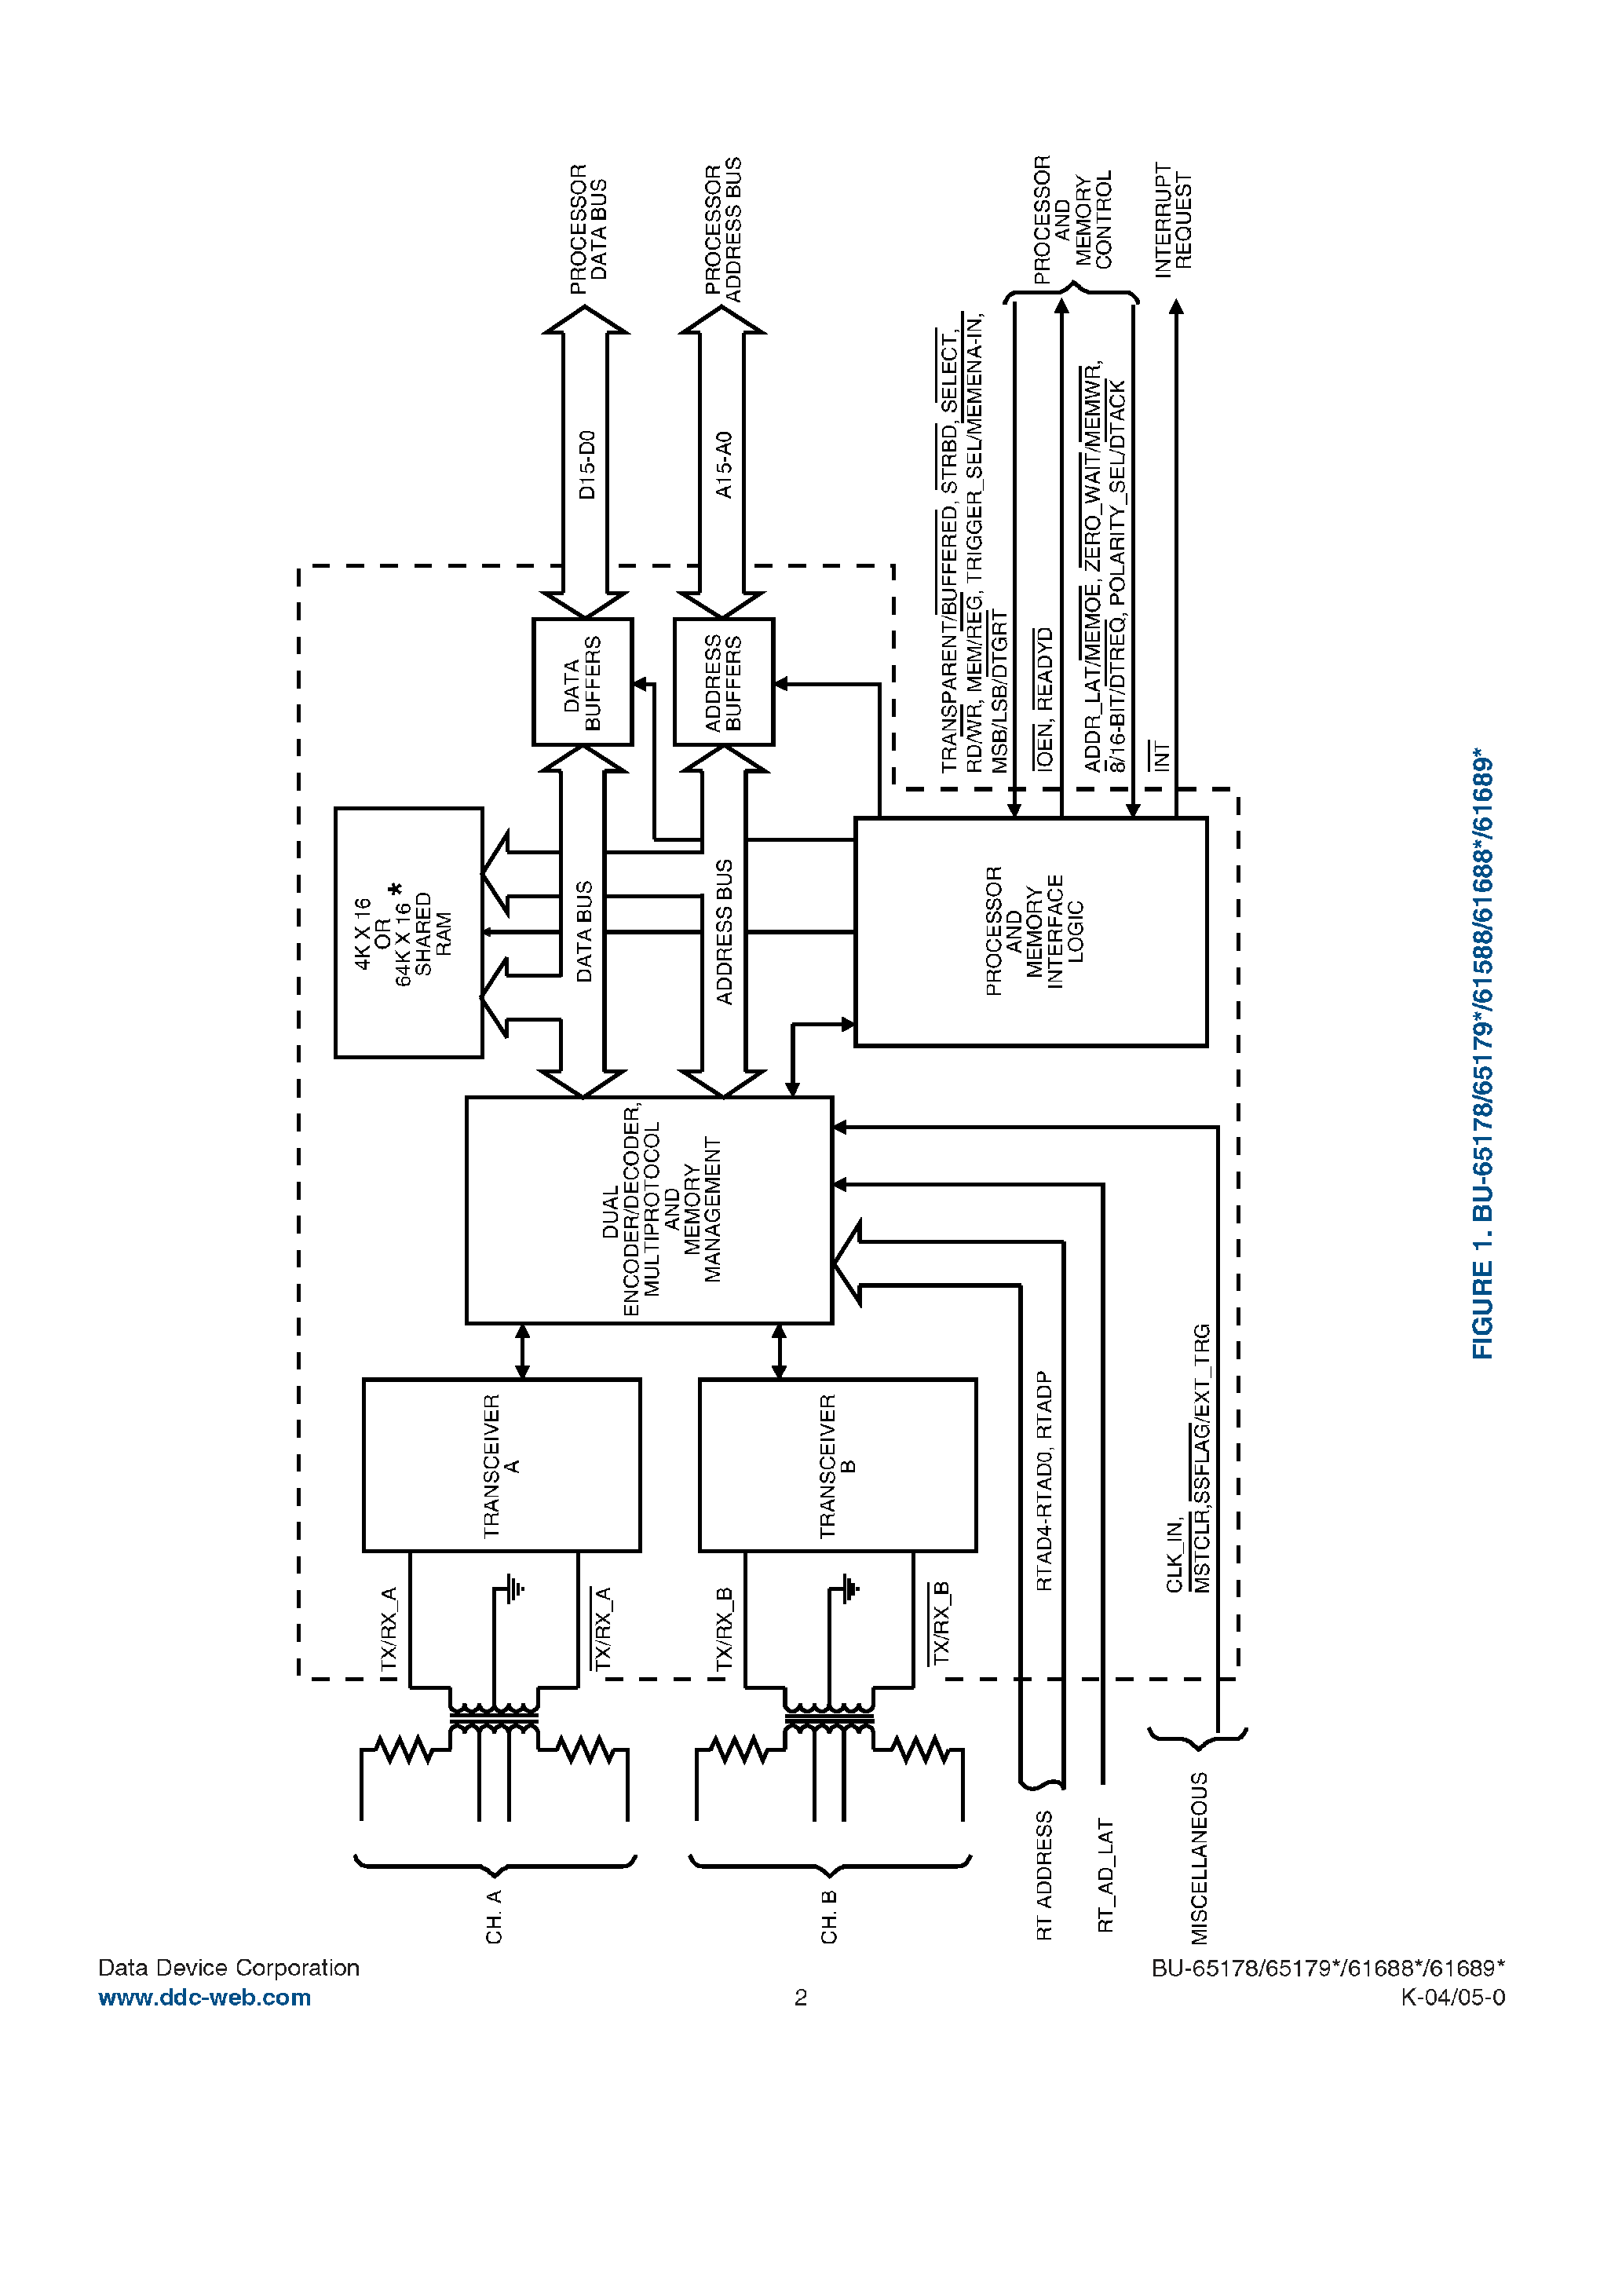 Datasheet BU-61689 - Miniature Advanced Communication Engine and Mini-Ace Plus page 2